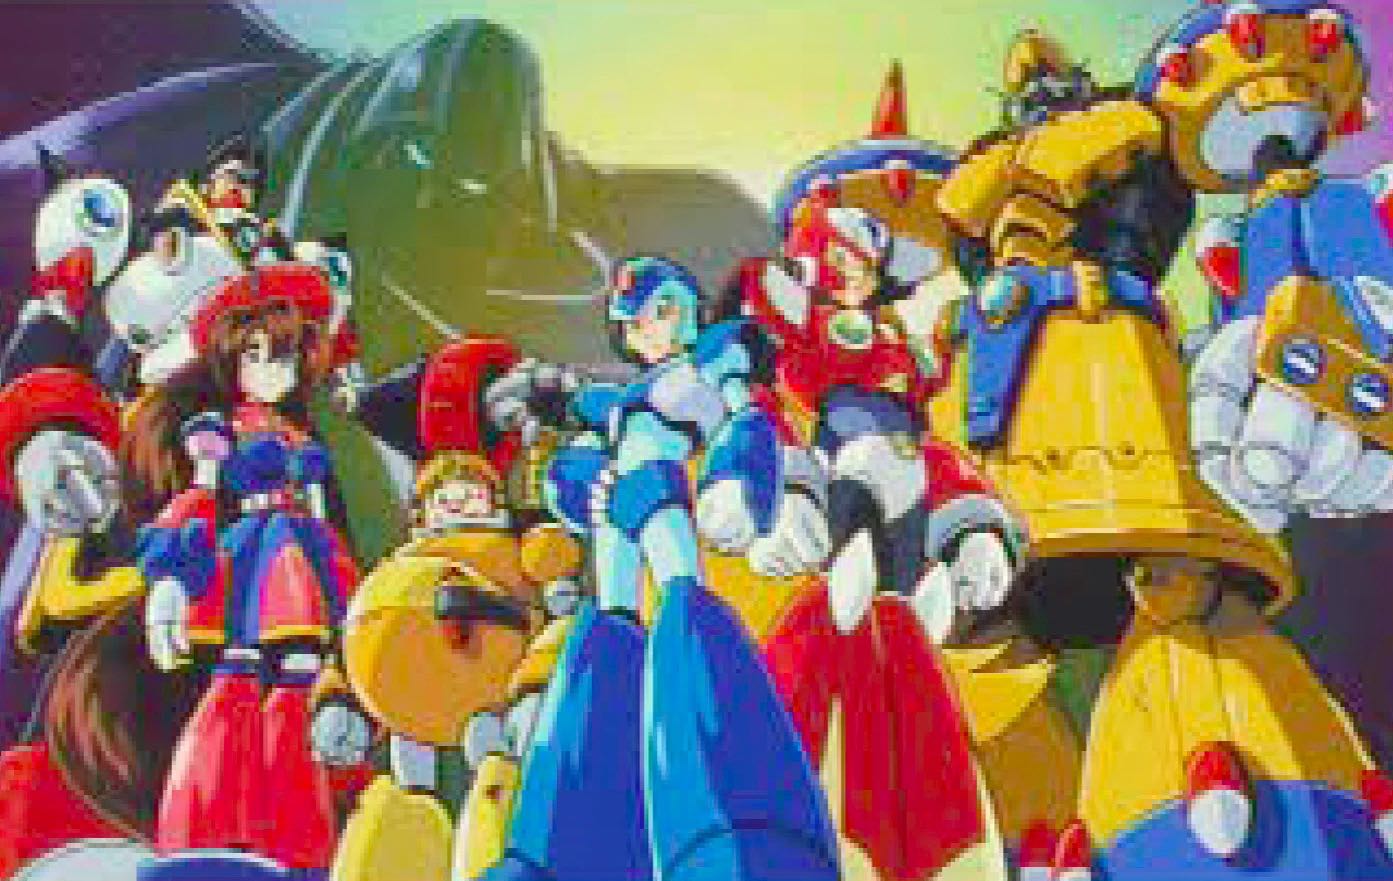 [Análise Retro Game] - Mega Man X4 - Saturn/Playstation Mega-man-x4-screen-shot-2017-01-15-12-50-am-2